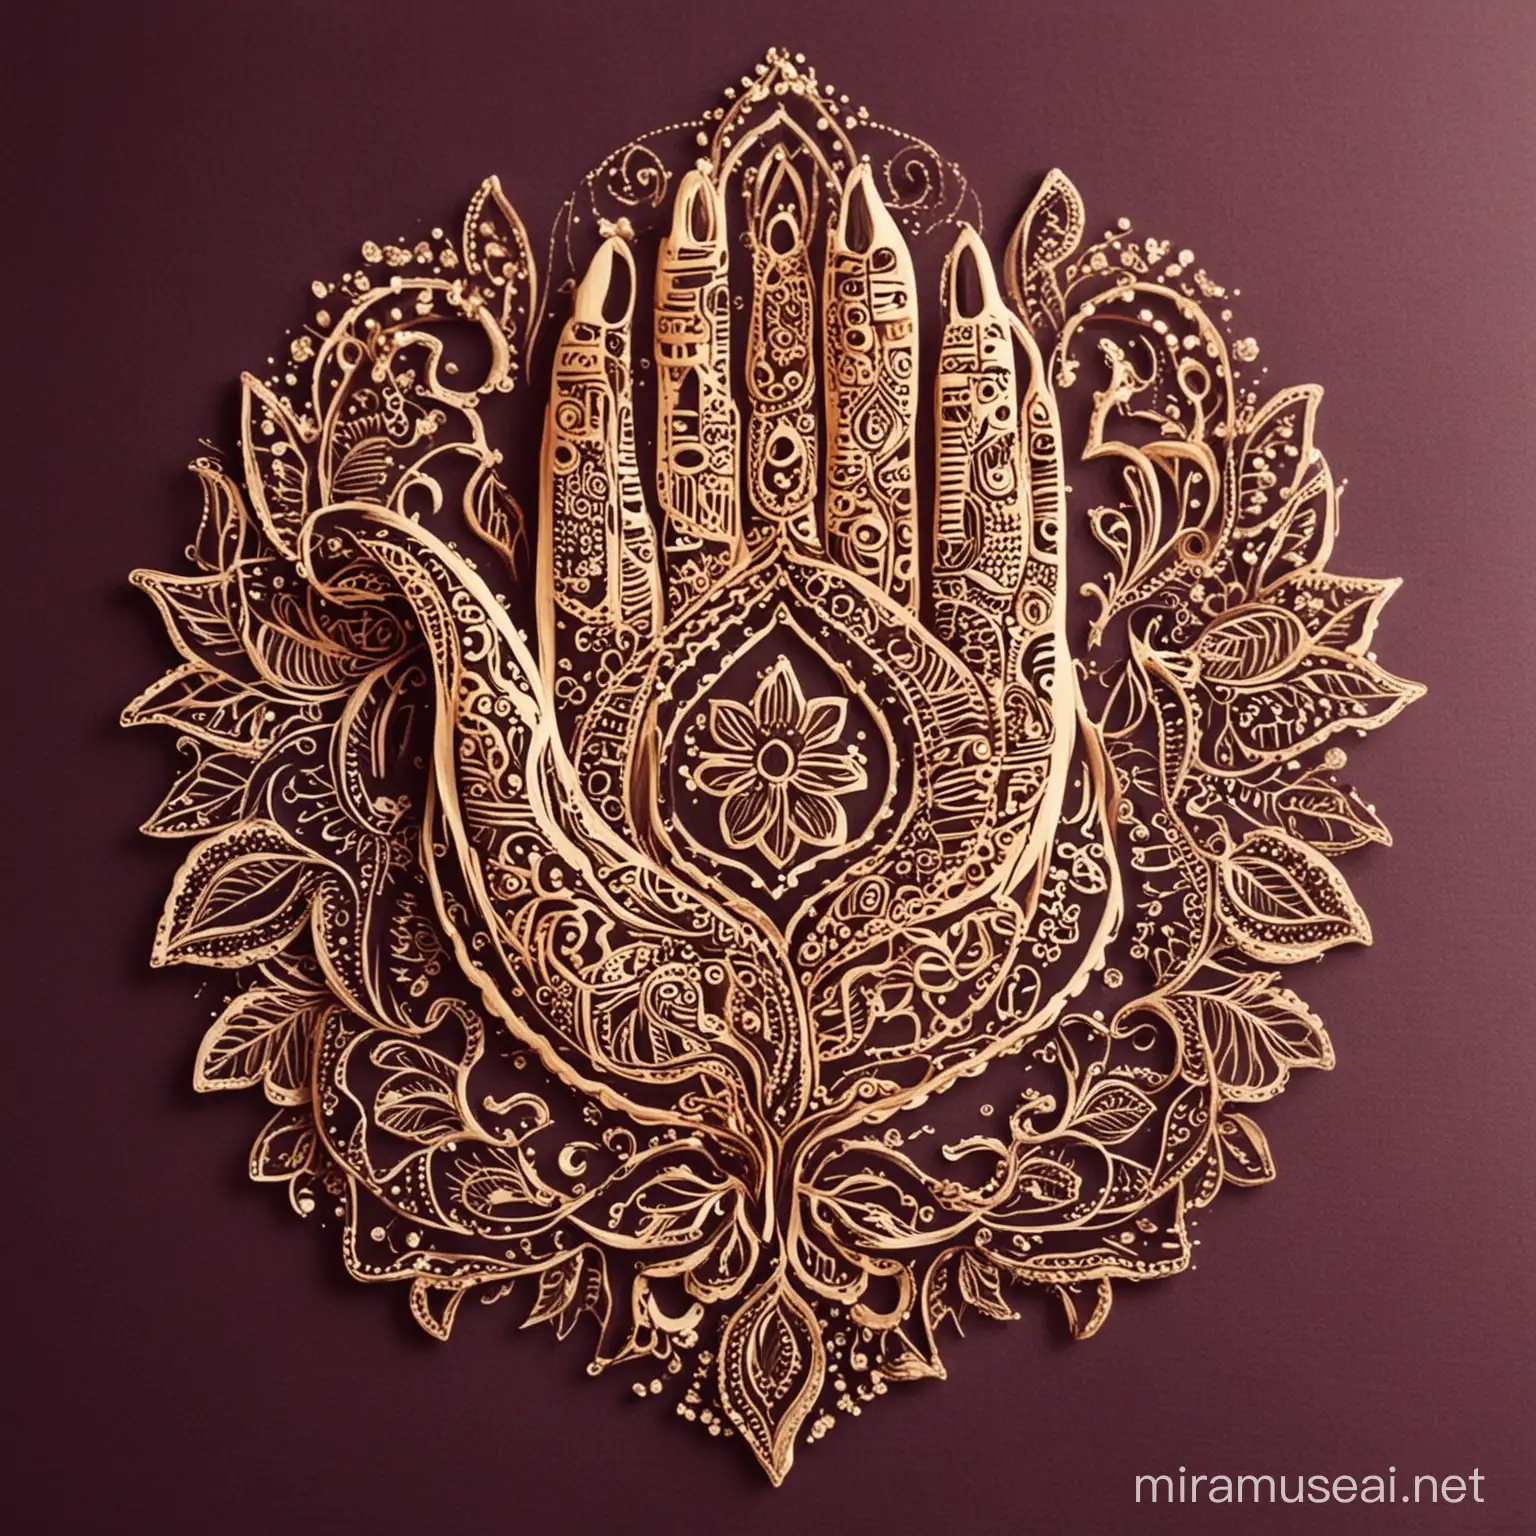 Elegant Henna Business Logo Design with Intricate Patterns